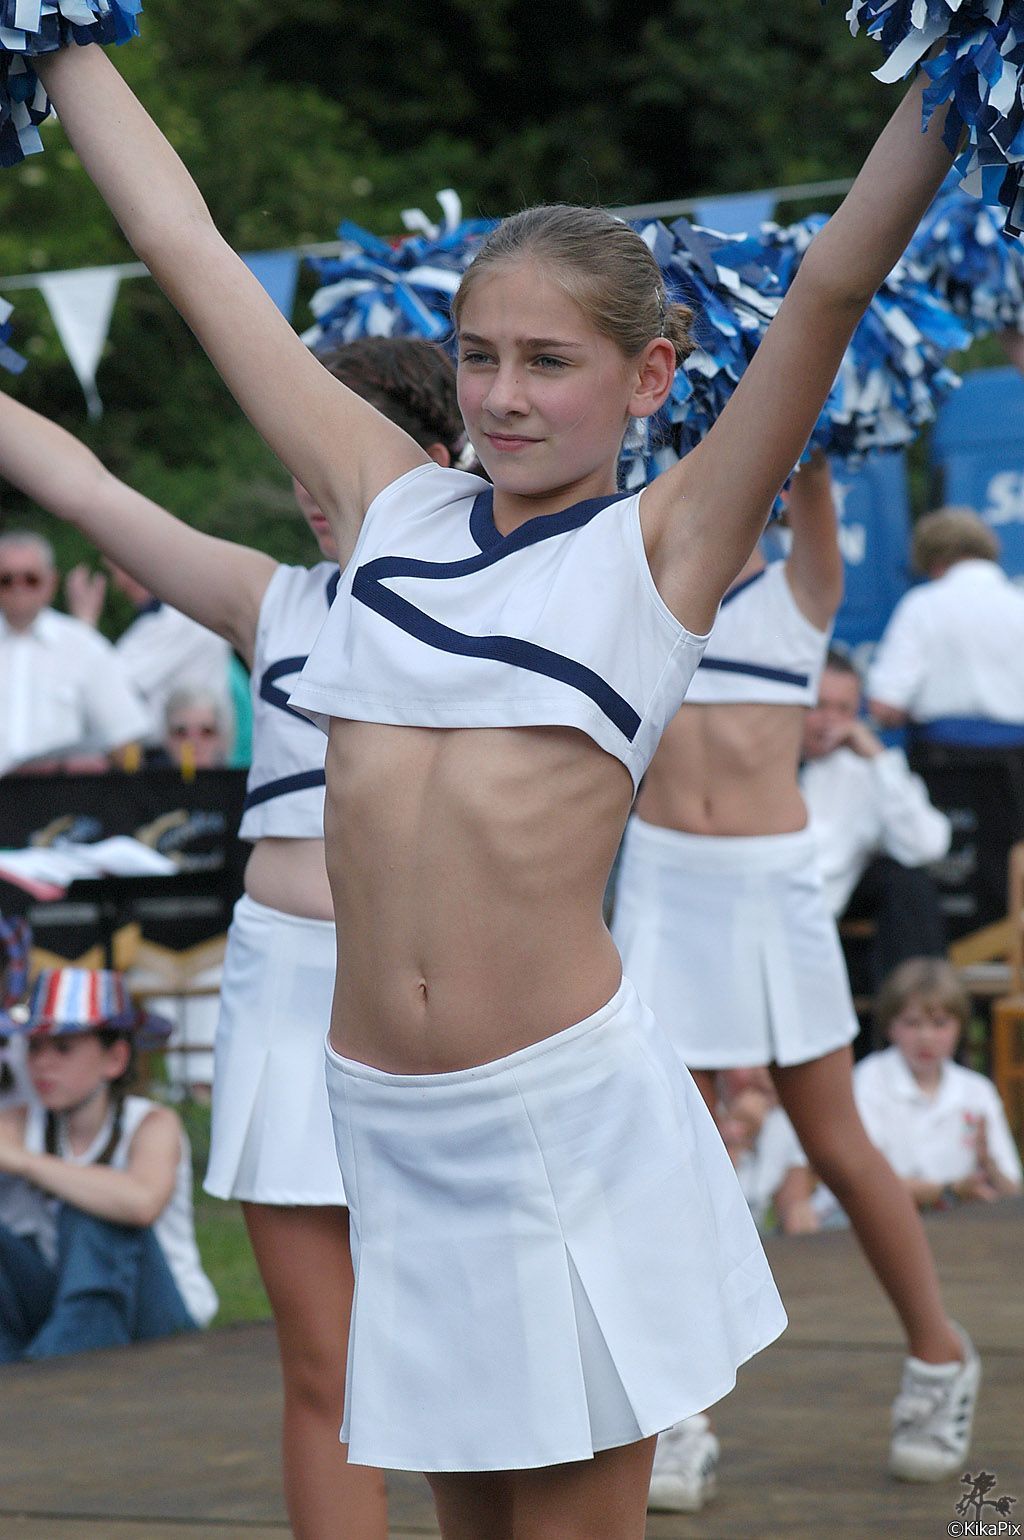 Cheerleaders upskirt pics image